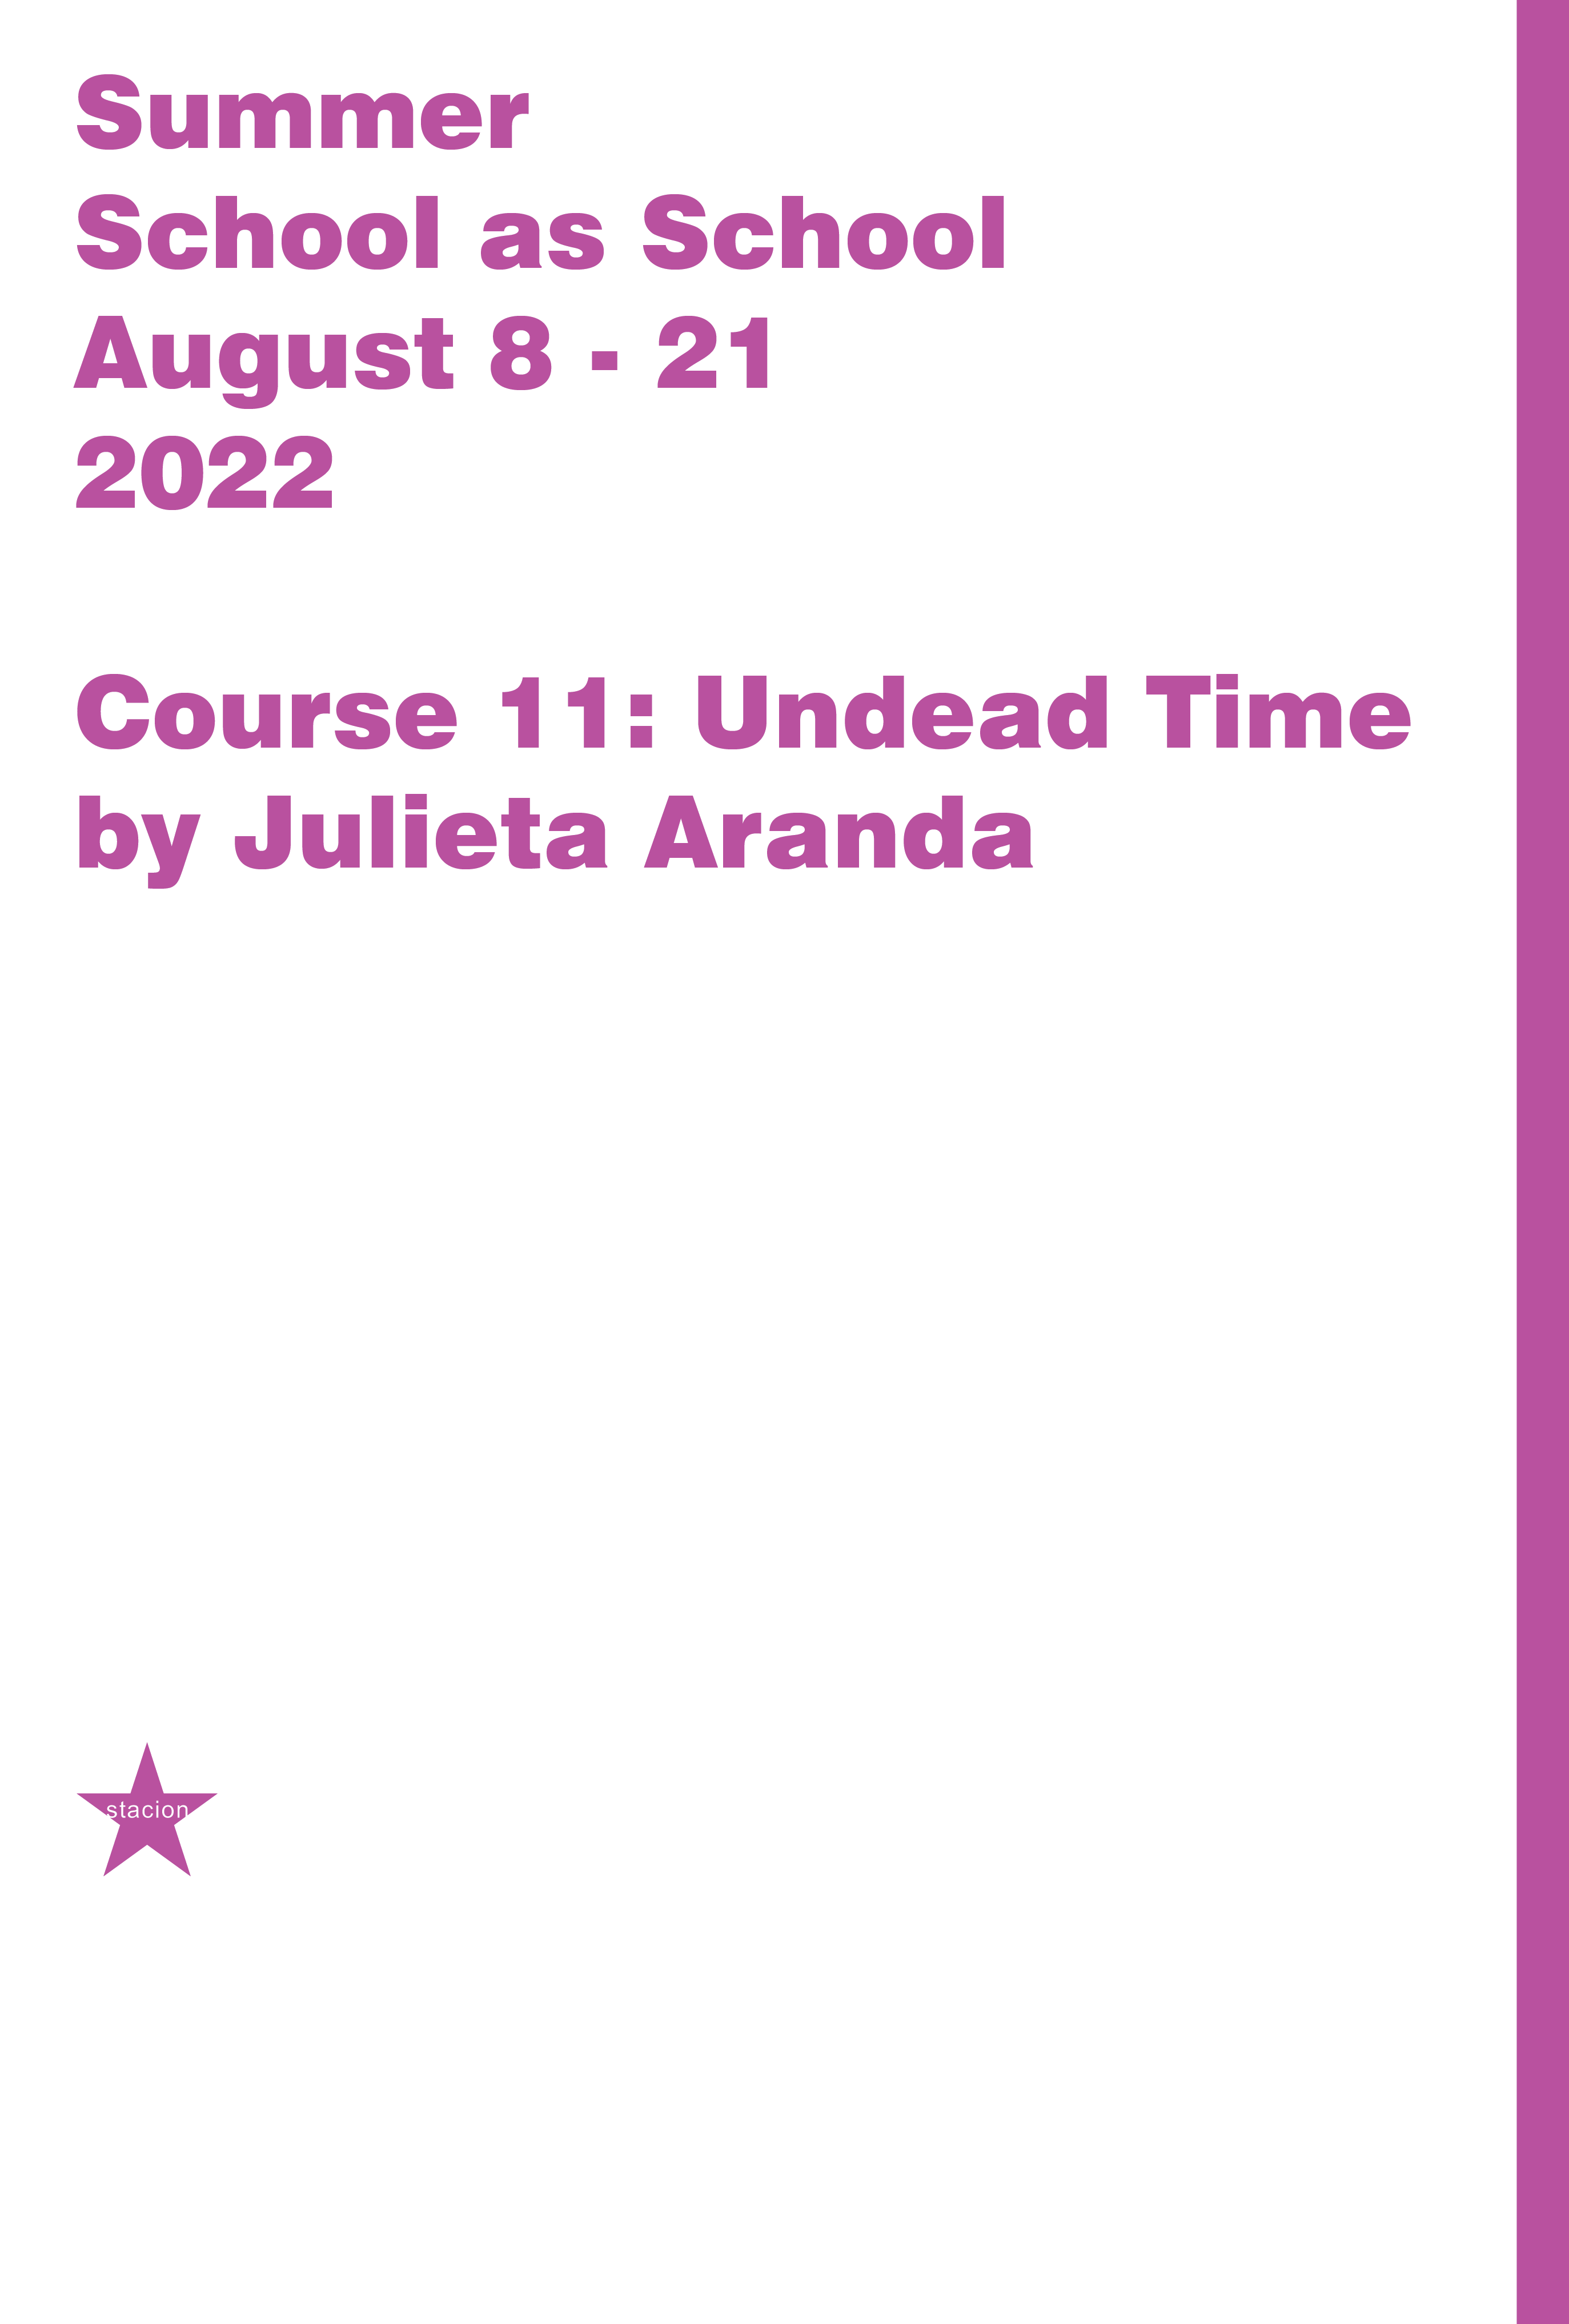 Course 11: Undead Time